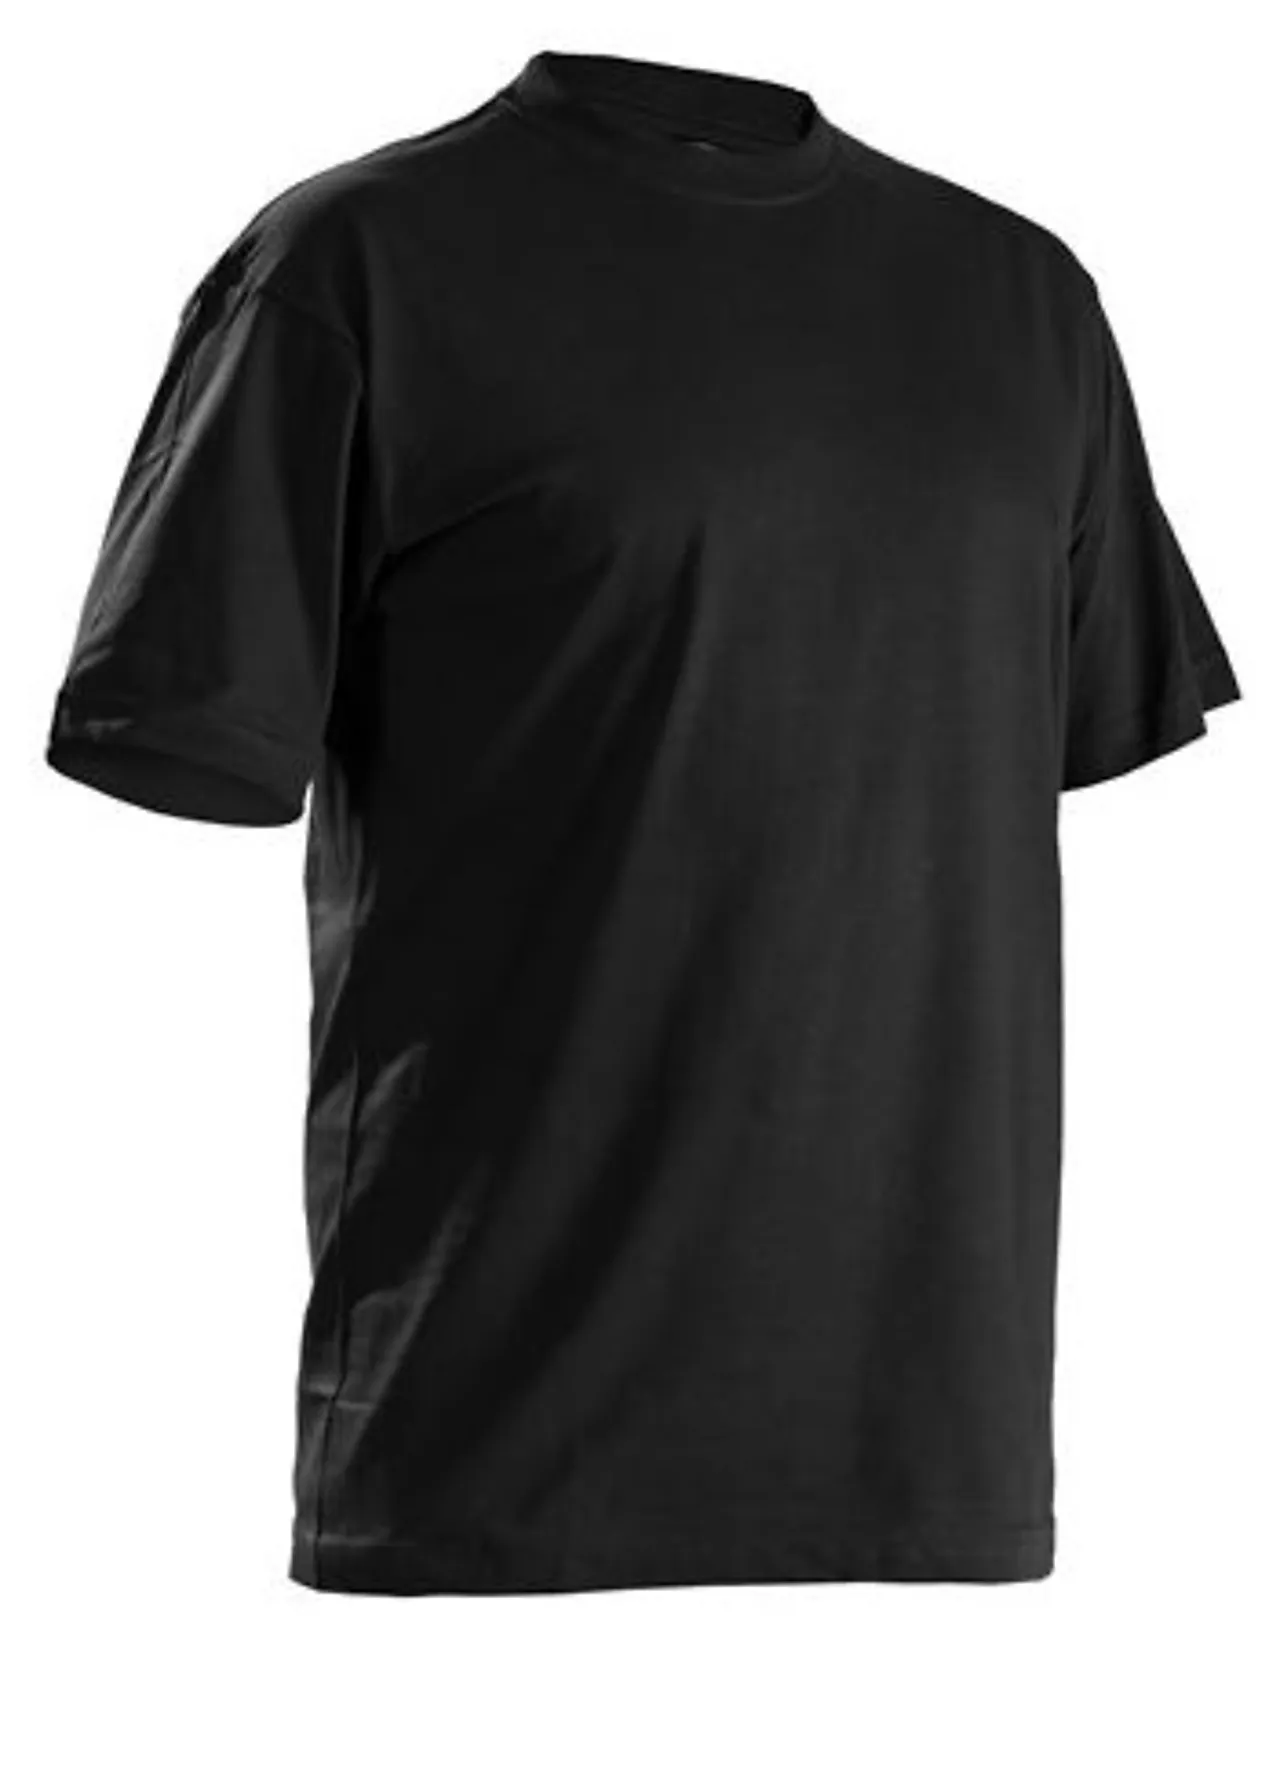 T-skjorte 5 pakk 332510429900xs 5 pakk svart null - null - 2 - Miniatyr